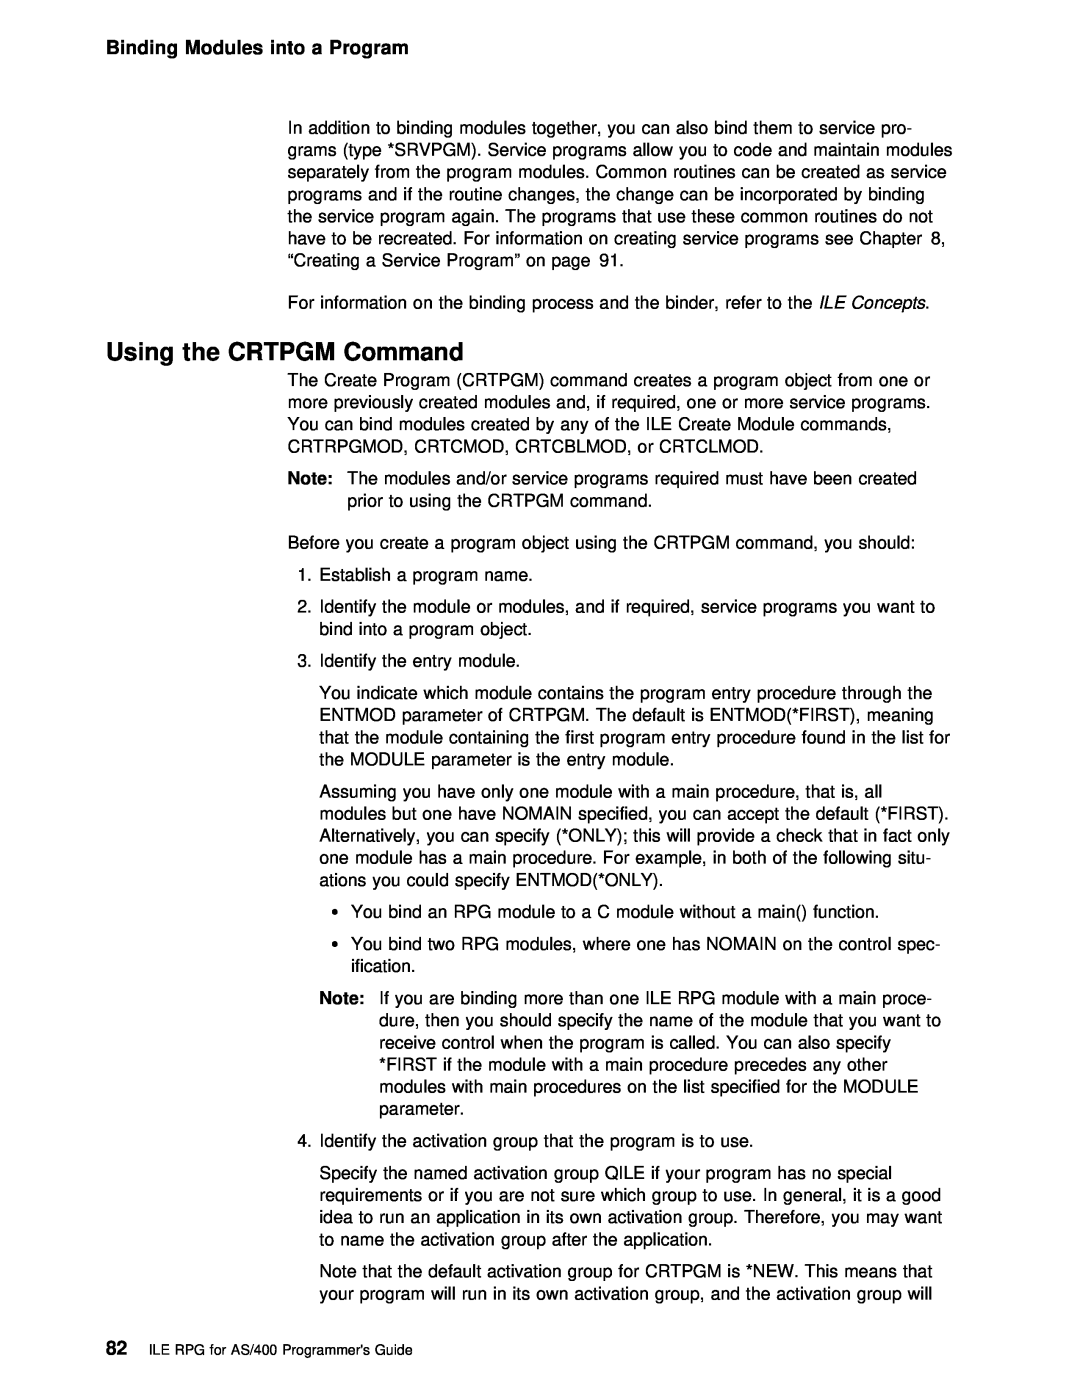 IBM AS/400 manual into a, Using, Crtpgm 